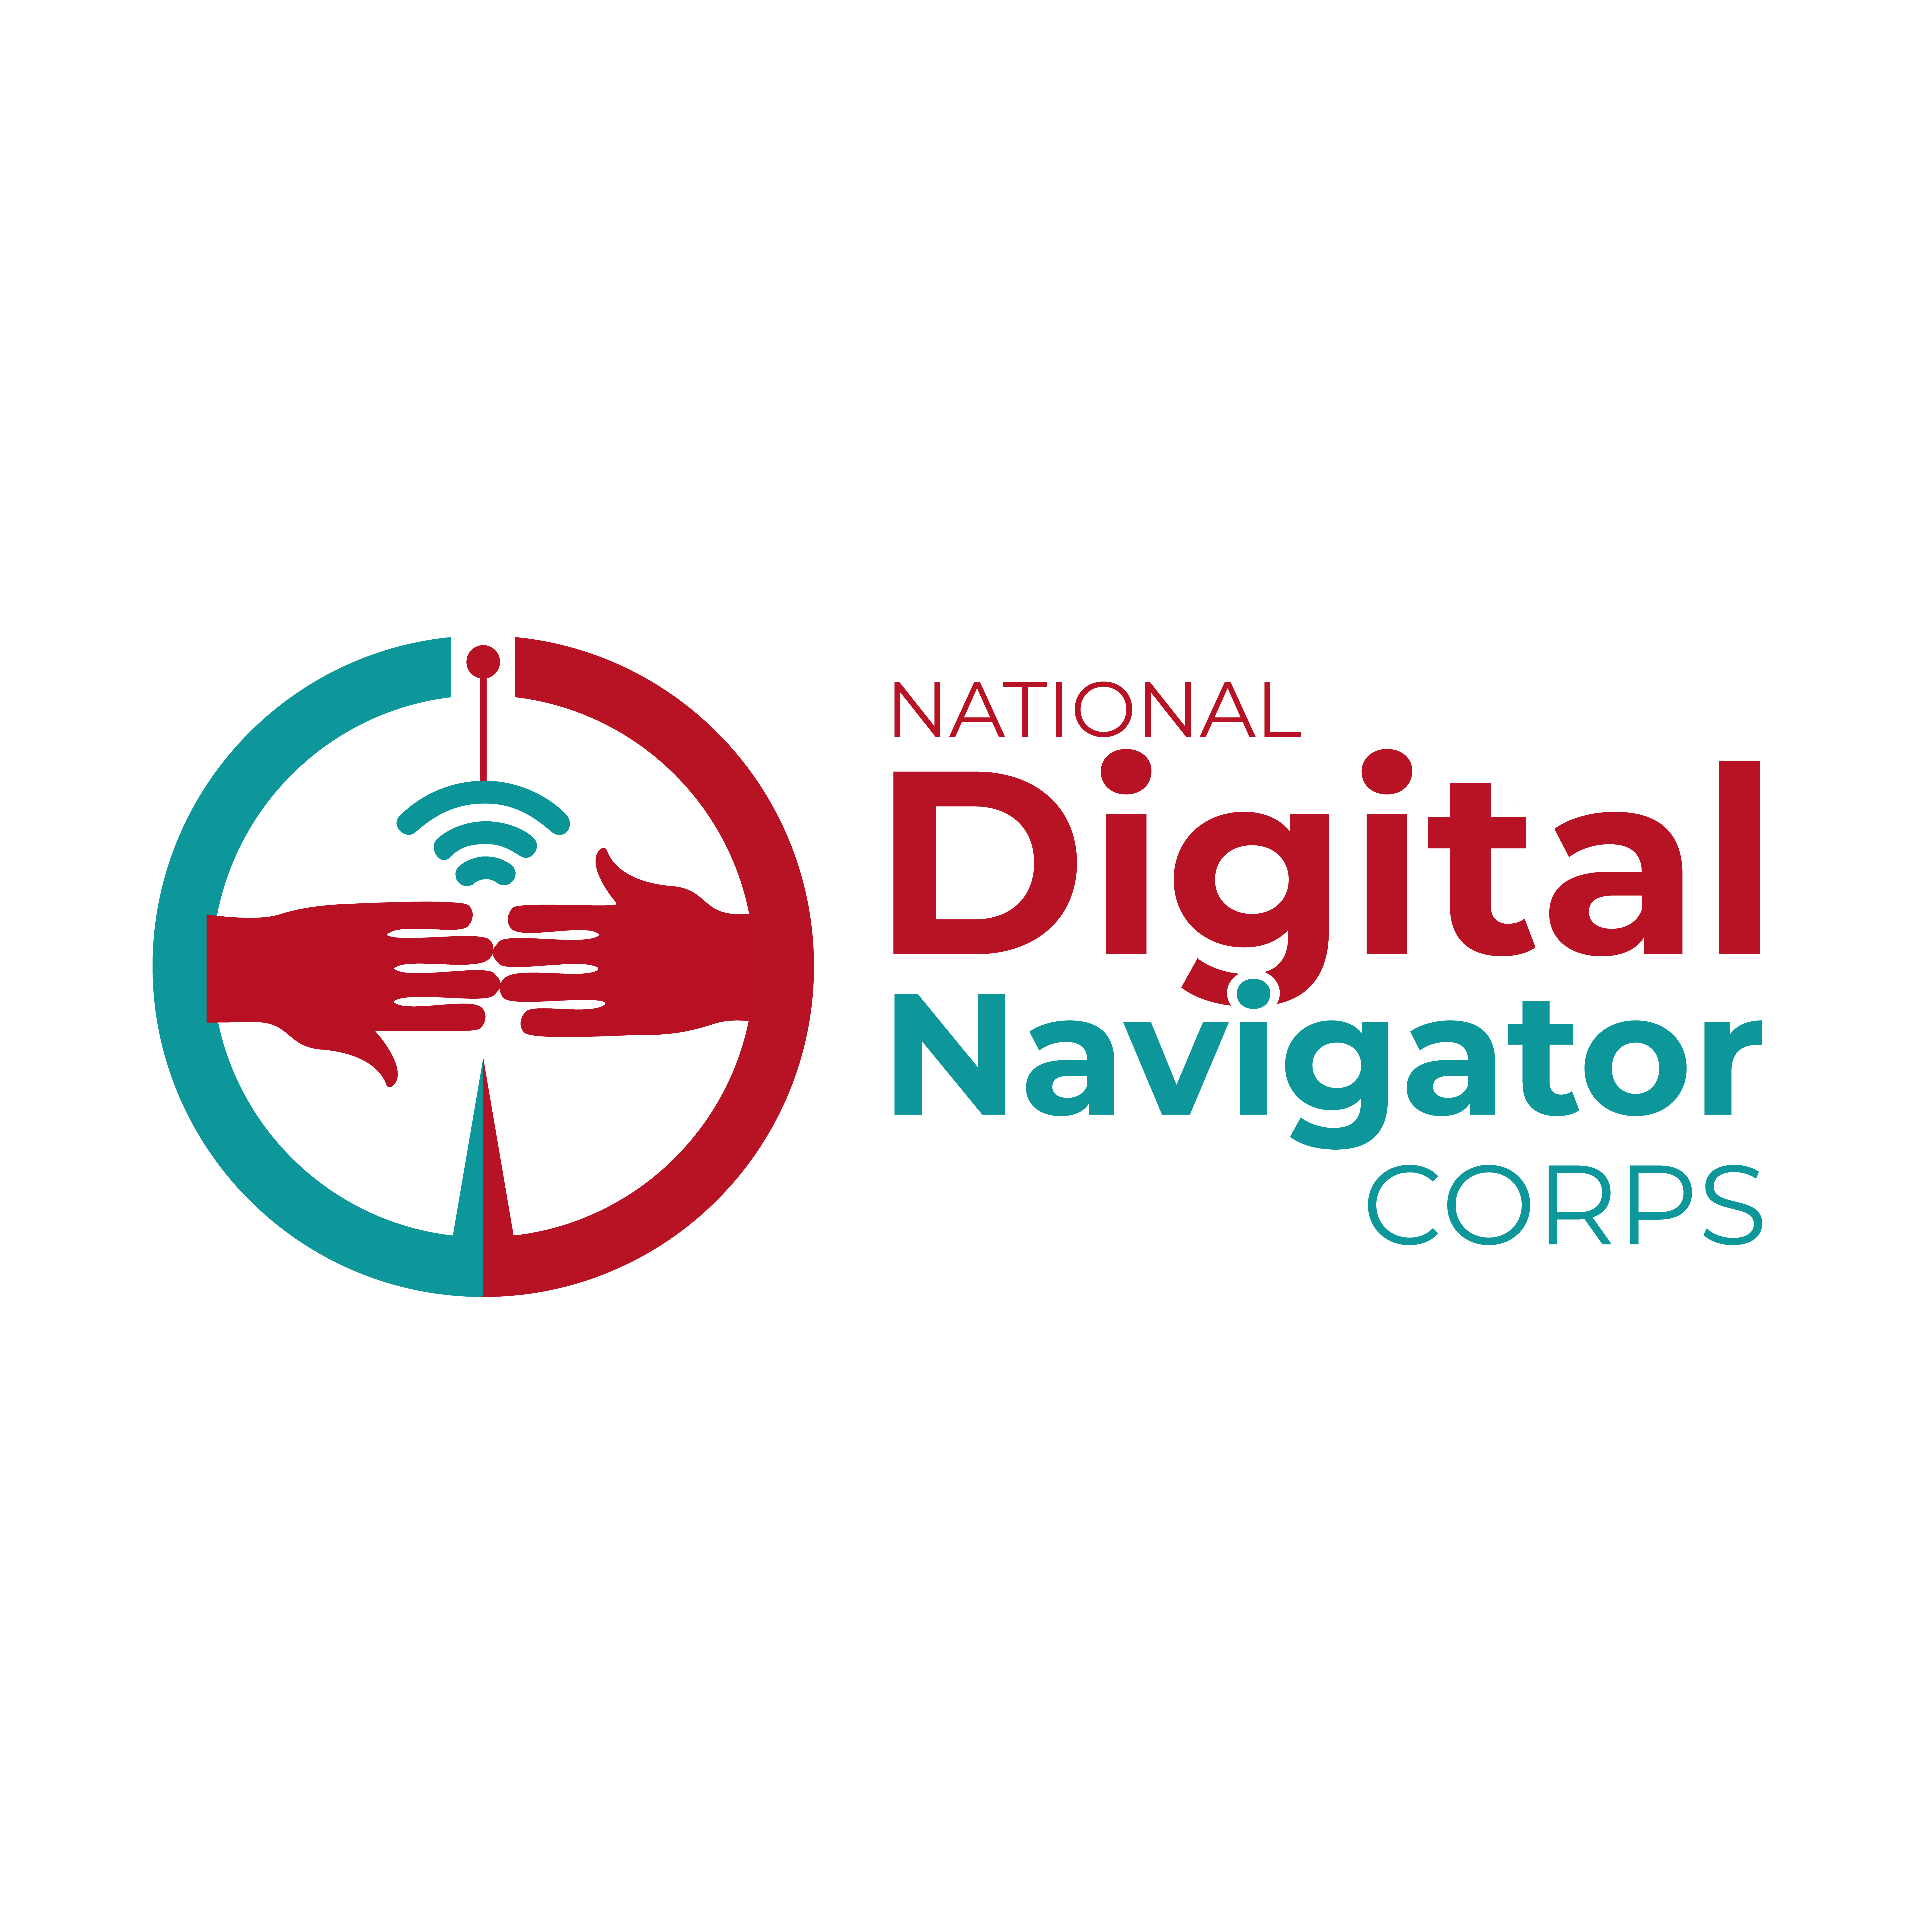 National Digital Navigator Corps logo